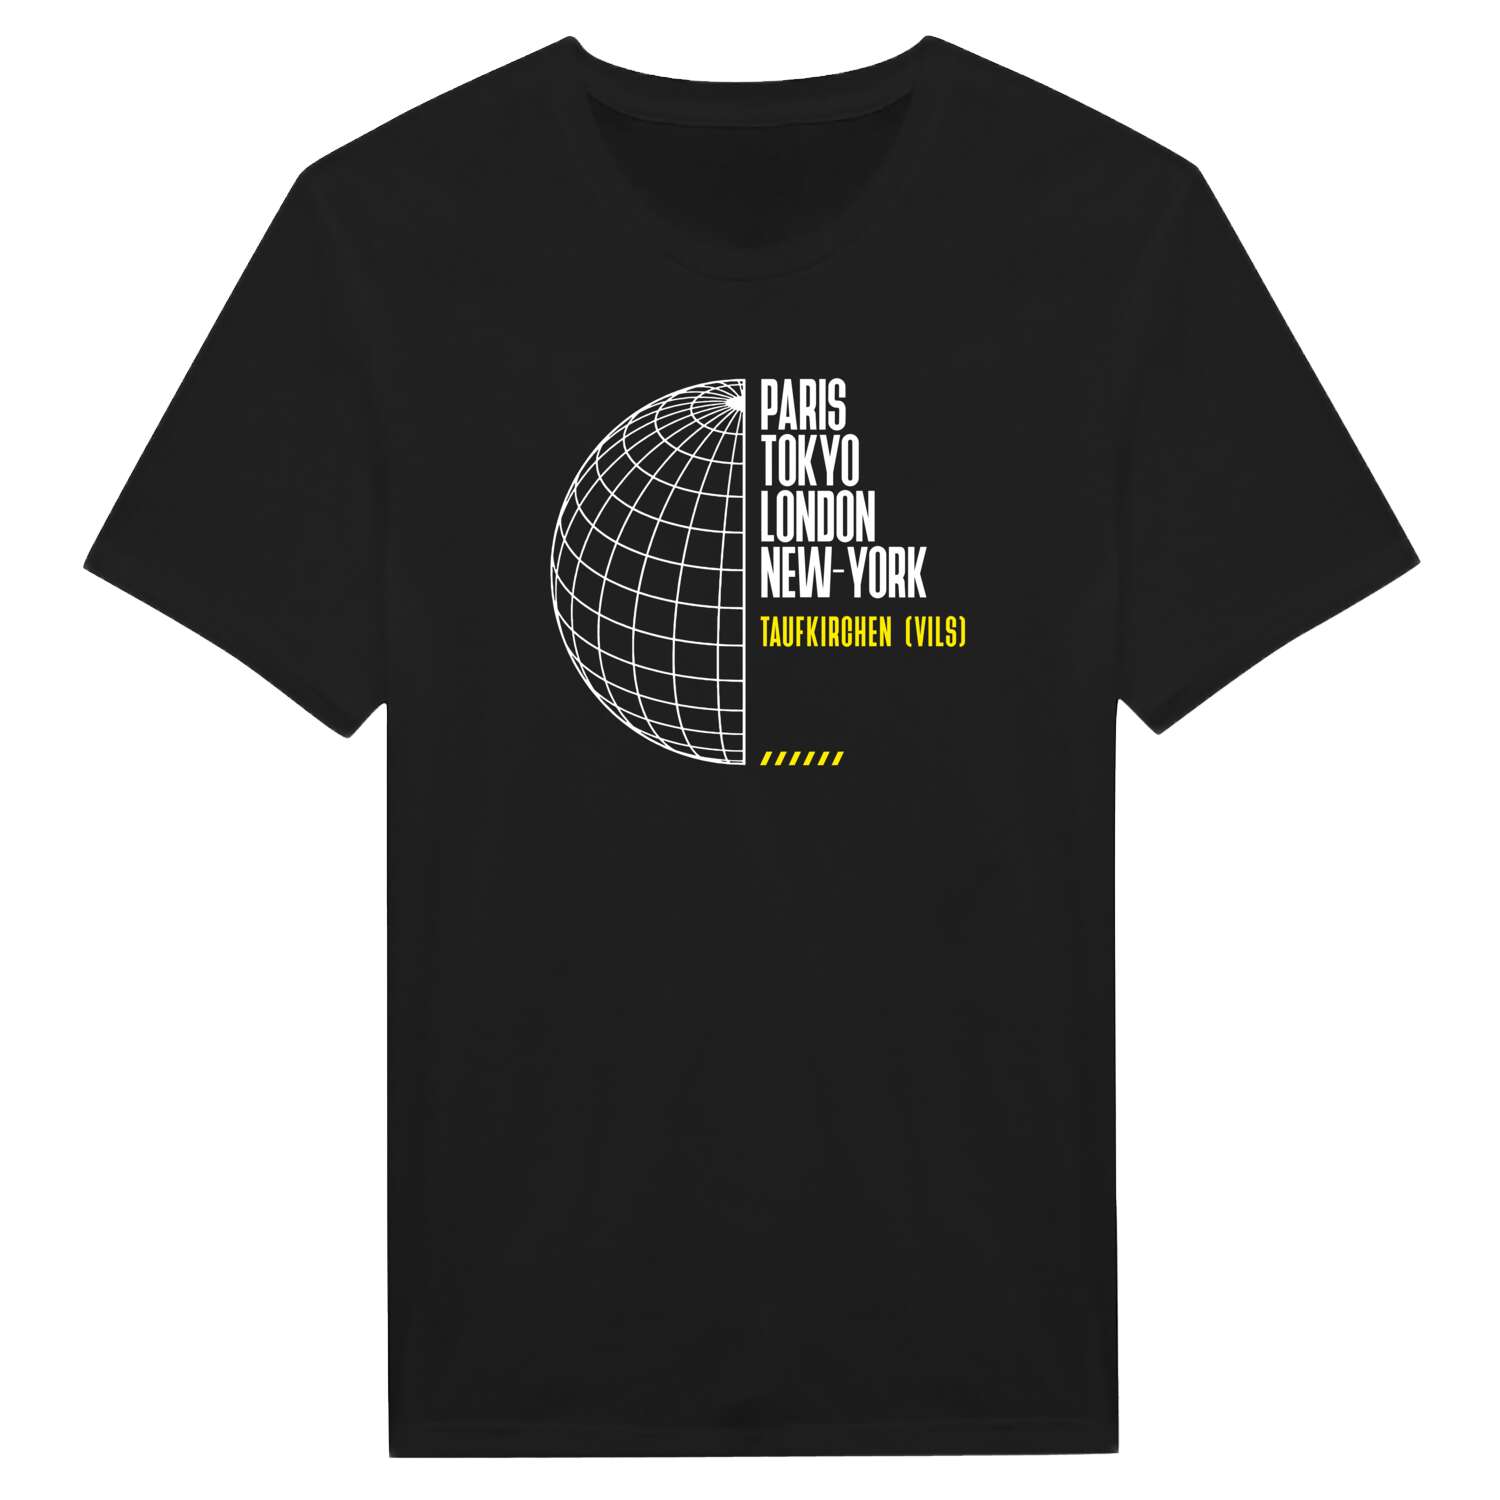 Taufkirchen (Vils) T-Shirt »Paris Tokyo London«